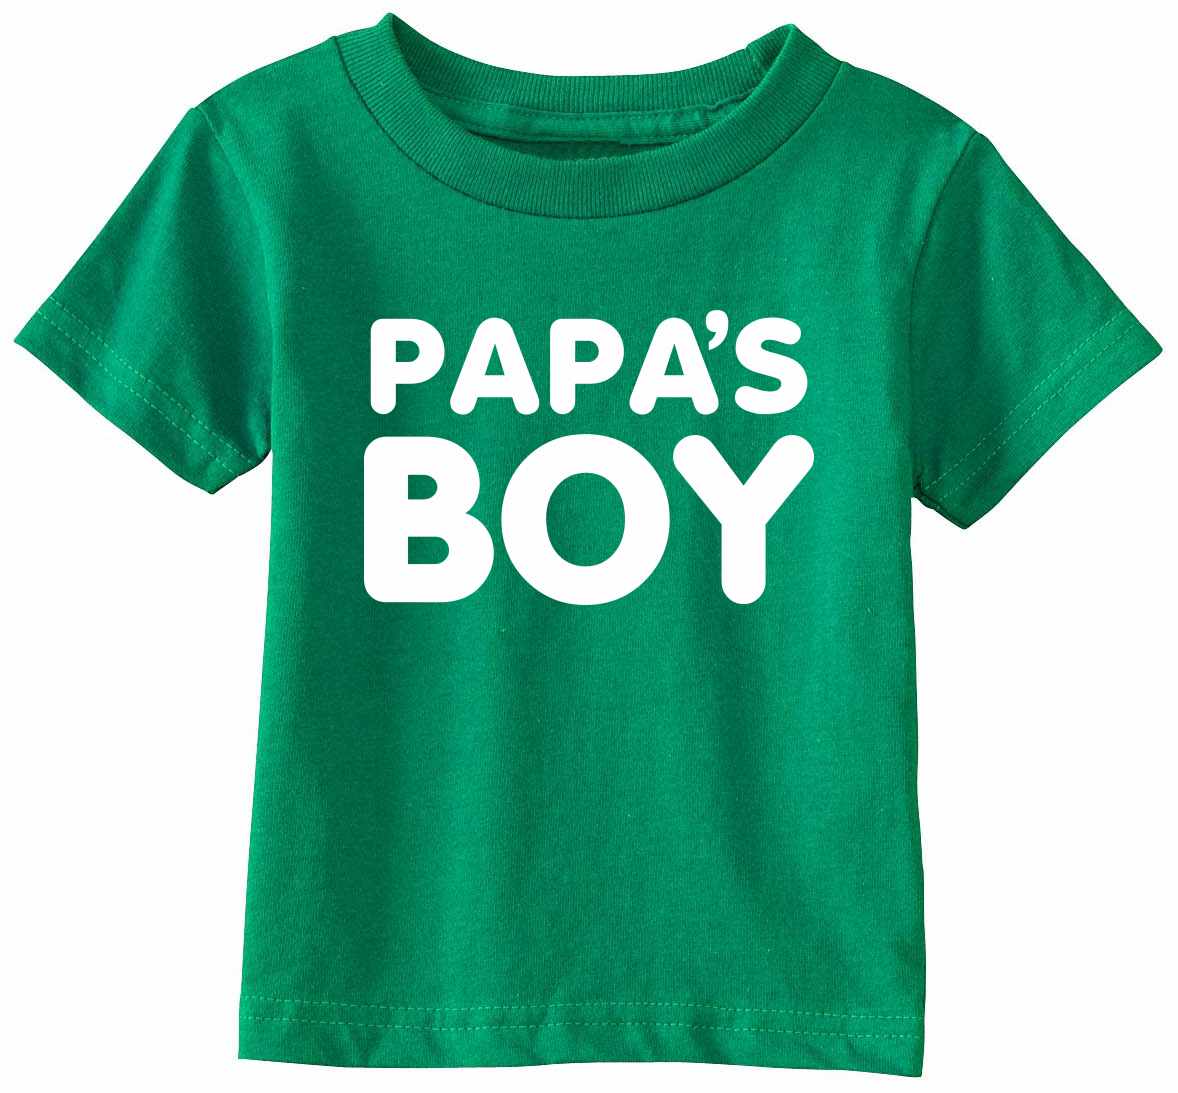 Papa's Boy on Infant-Toddler T-Shirt